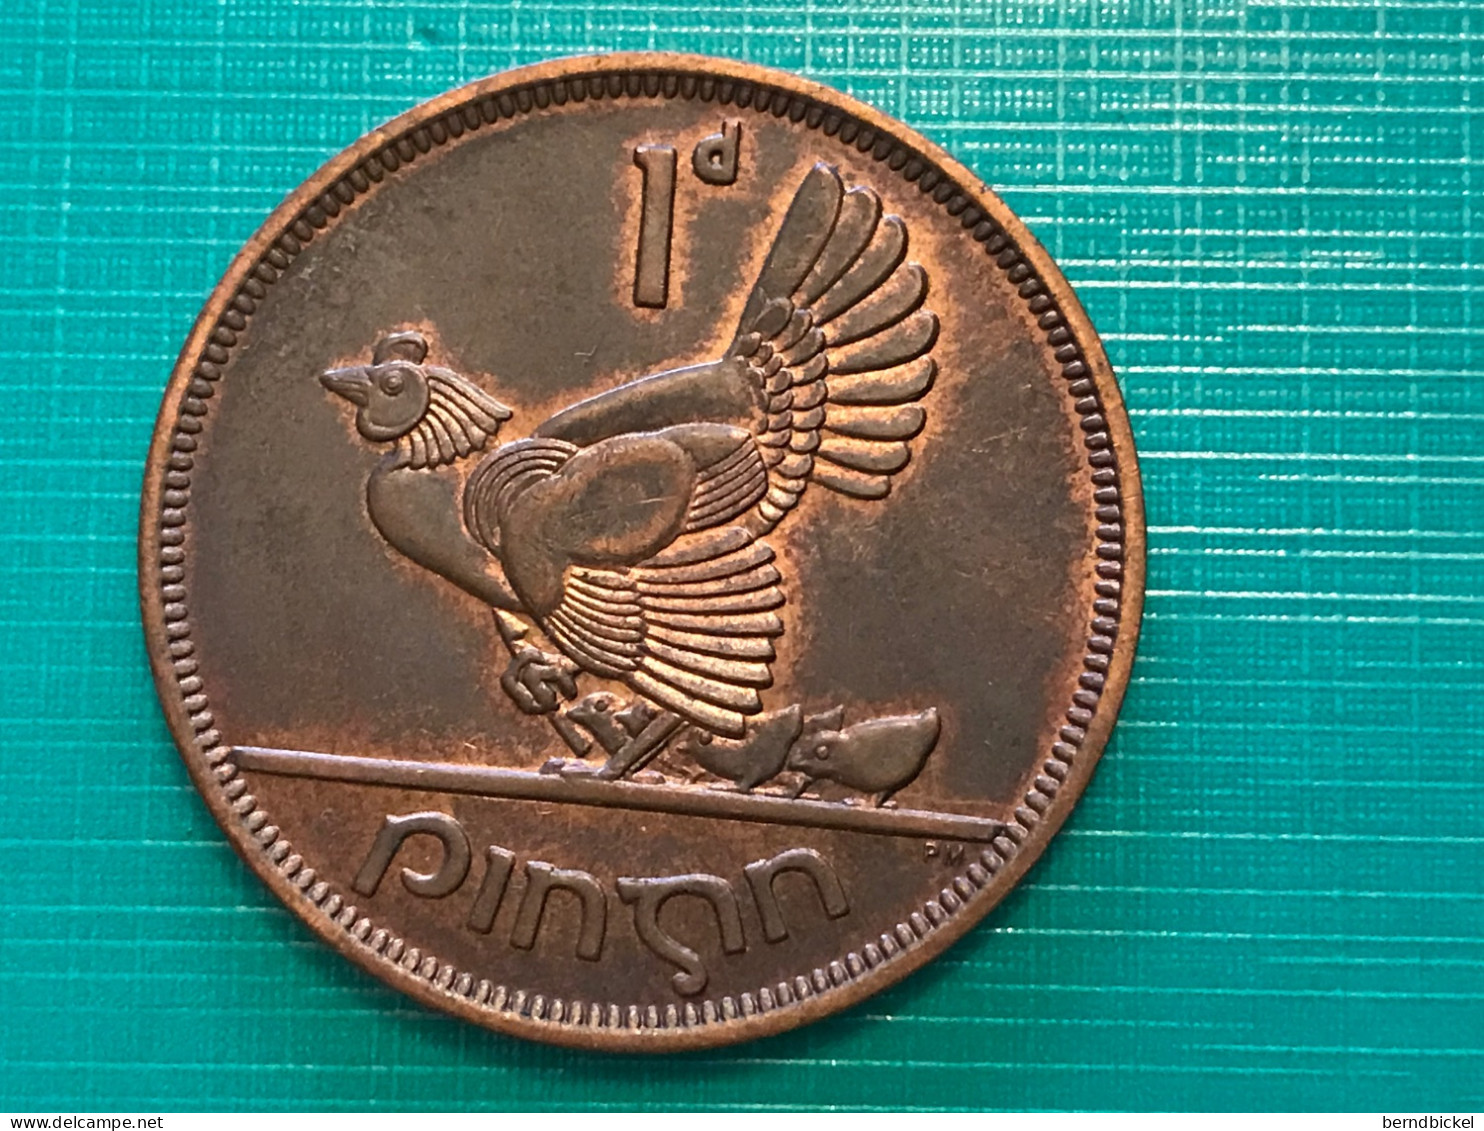 Münze Münzen Umlaufmünze Irland 1 Penny 1968 - Irland